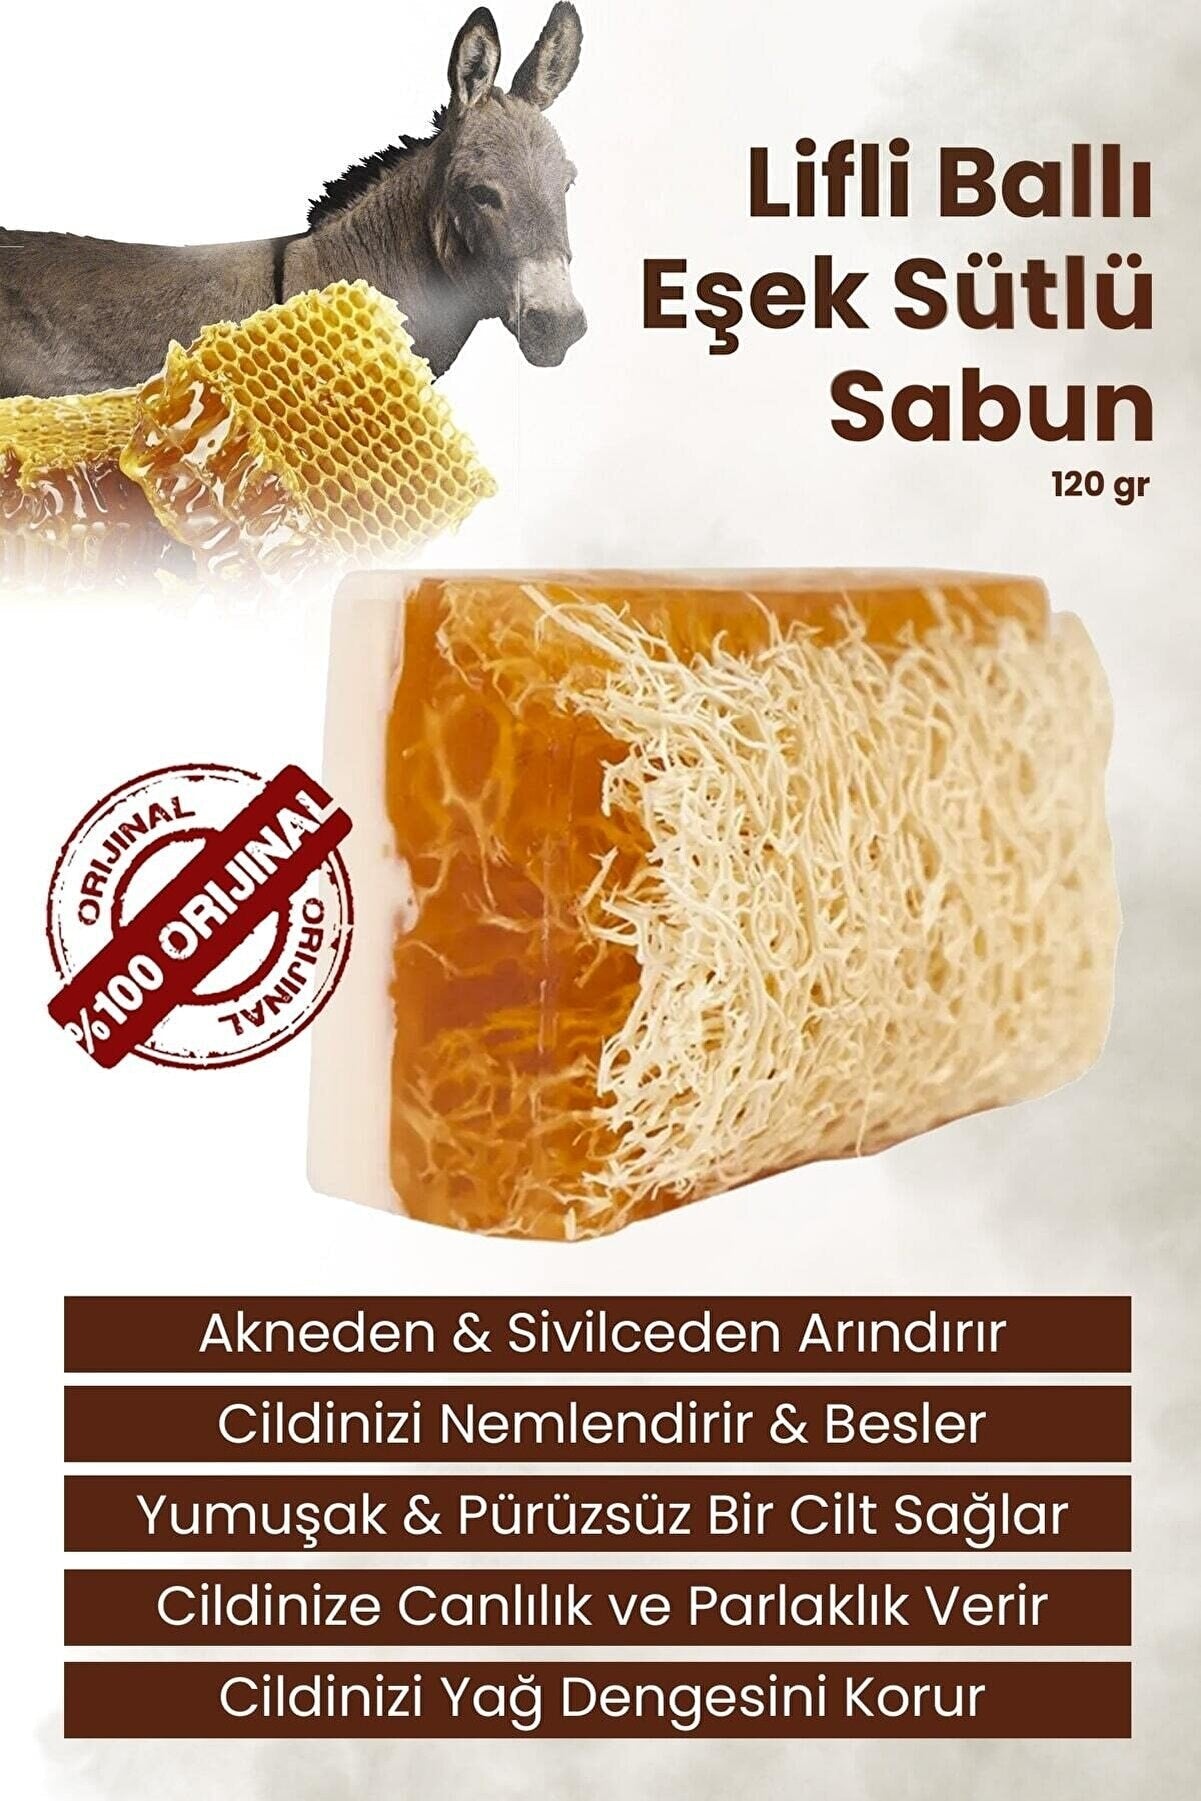 Rejuvenate with Honey Soap Pumpkin Fiber Eşek Milk Honey: The All-Round Body Care Solution